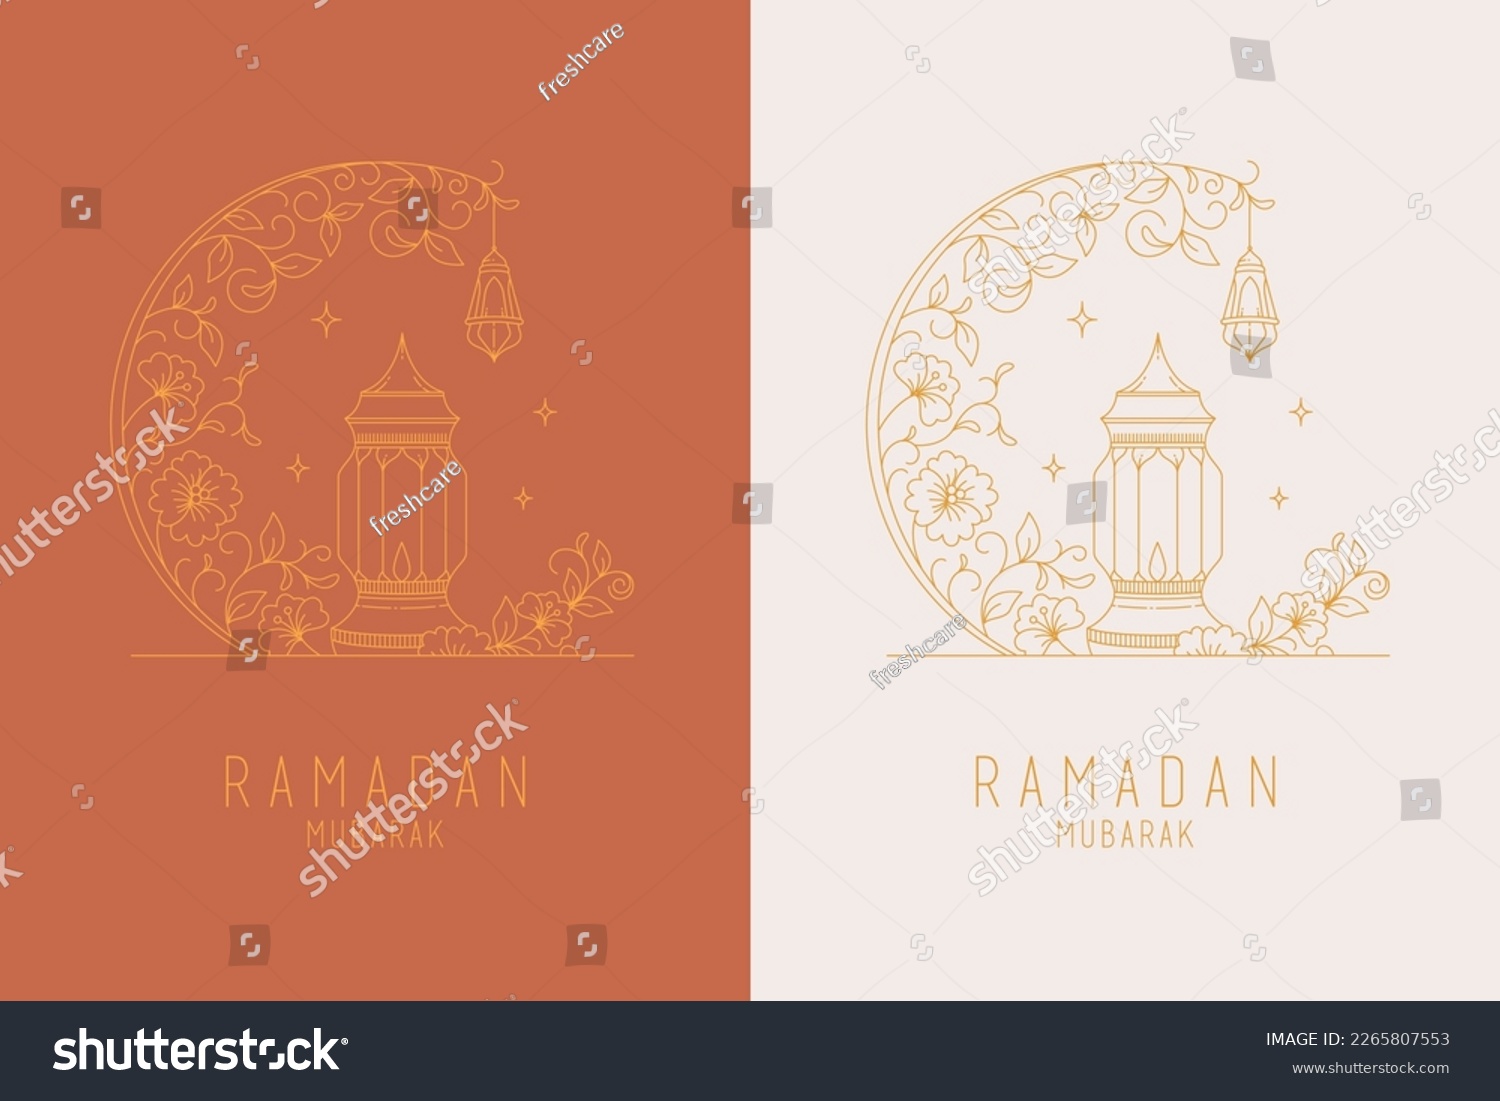 Ramadan Kareem Islamic greeting card with line art design vector illustration